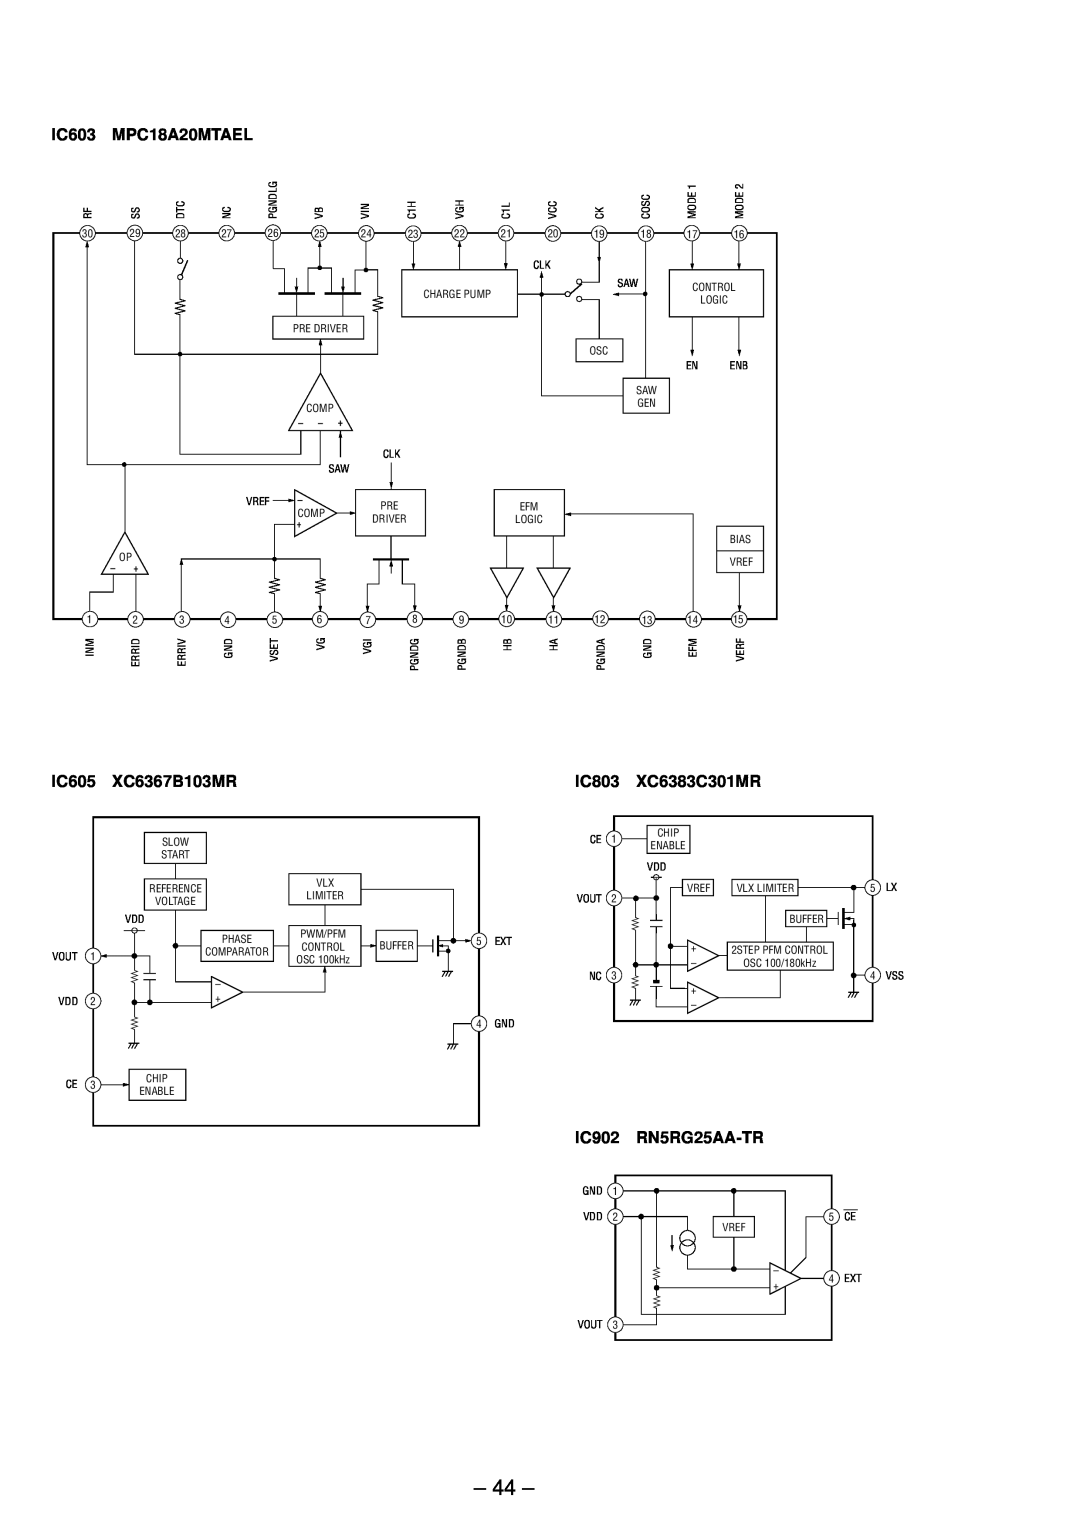 Sony MZ-R91 service manual IC603, MPC18A20MTAEL, IC605, XC6367B103MR, IC803, XC6383C301MR, IC902, RN5RG25AA-TR 